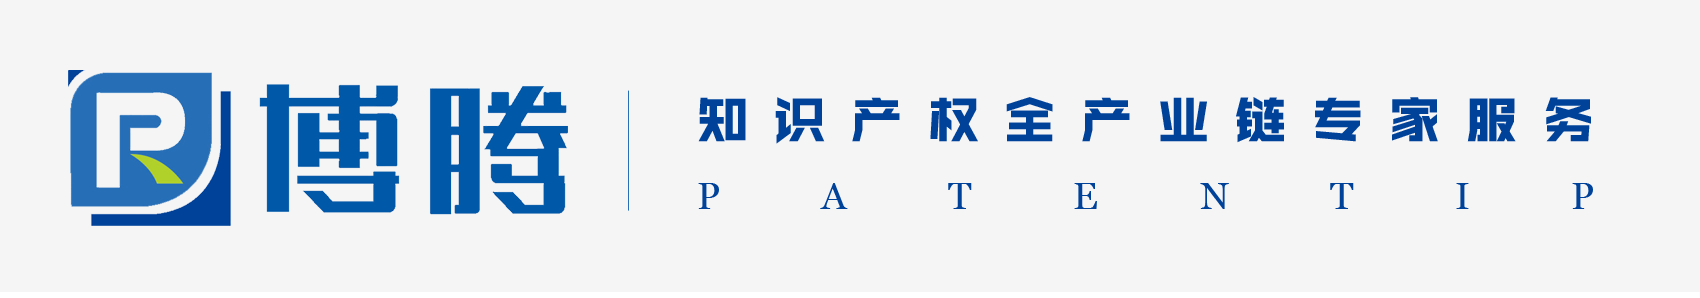 logo-全产业链.png